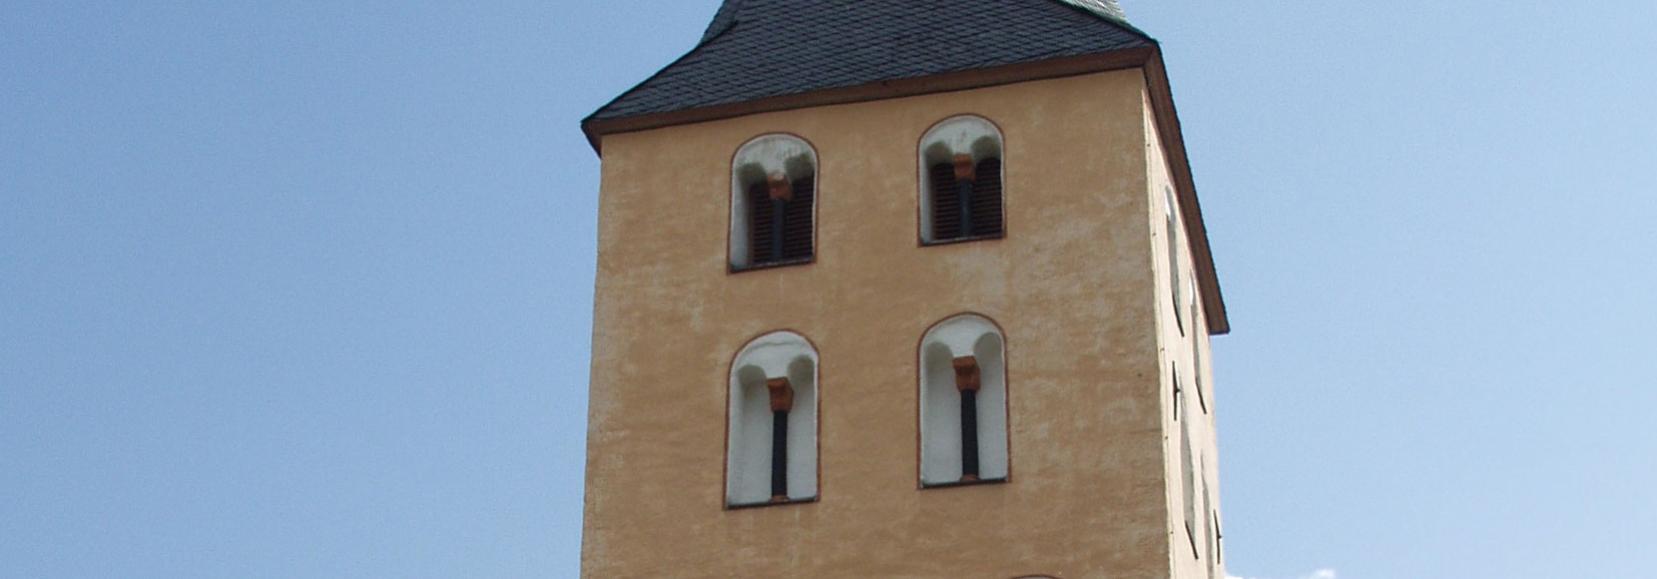 St. Georg - Frauenberg